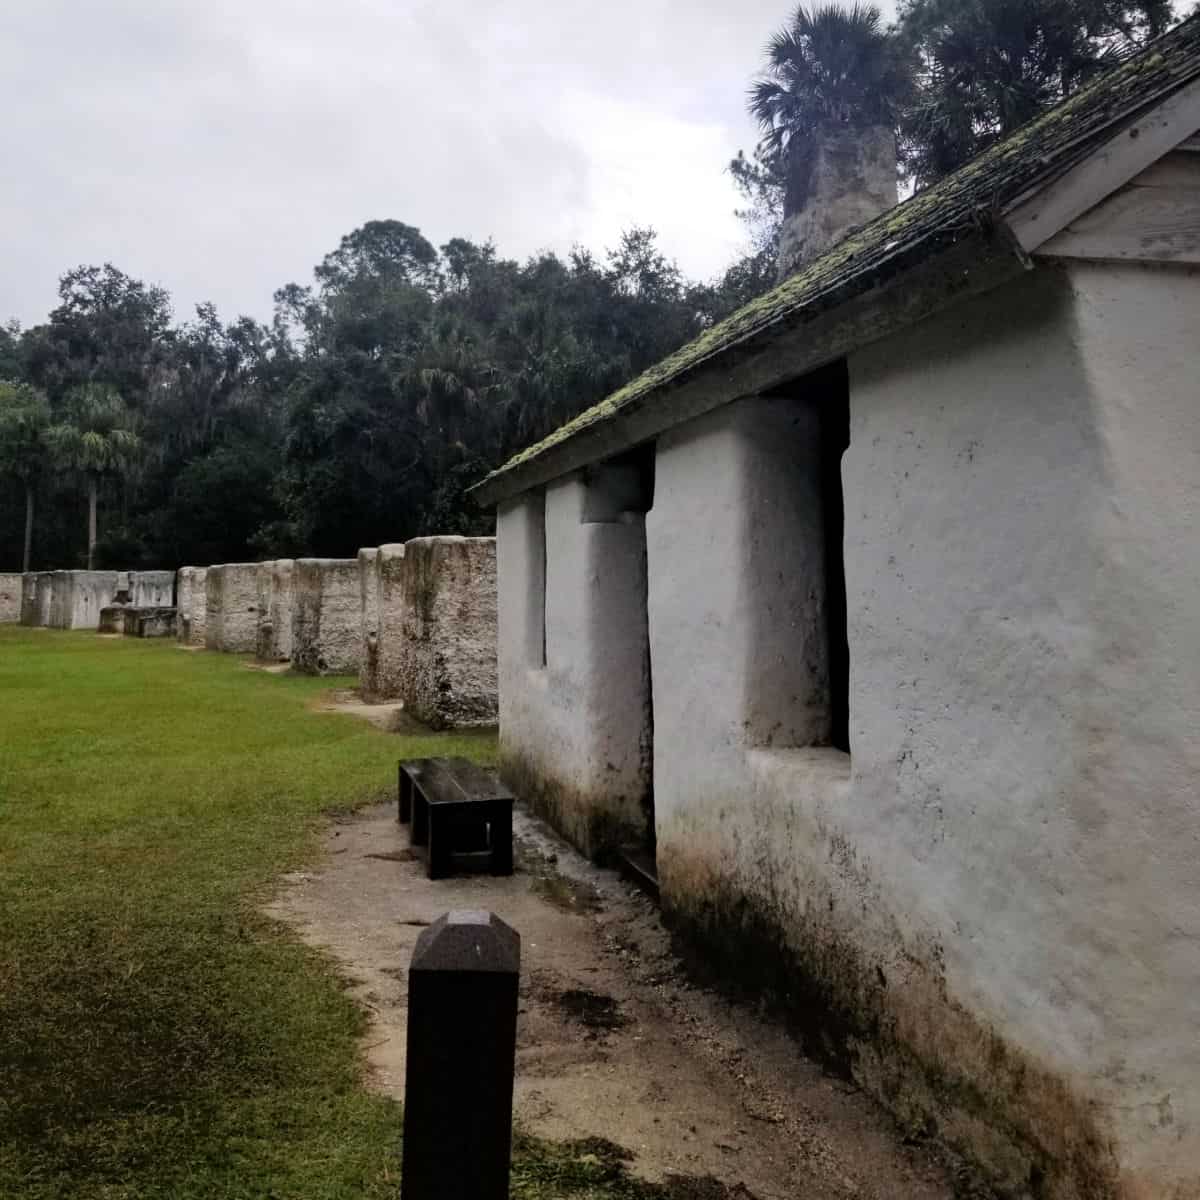 Slave housing at Kingsley Plantation at Timucuan Ecological and Historic Preserve in Florida